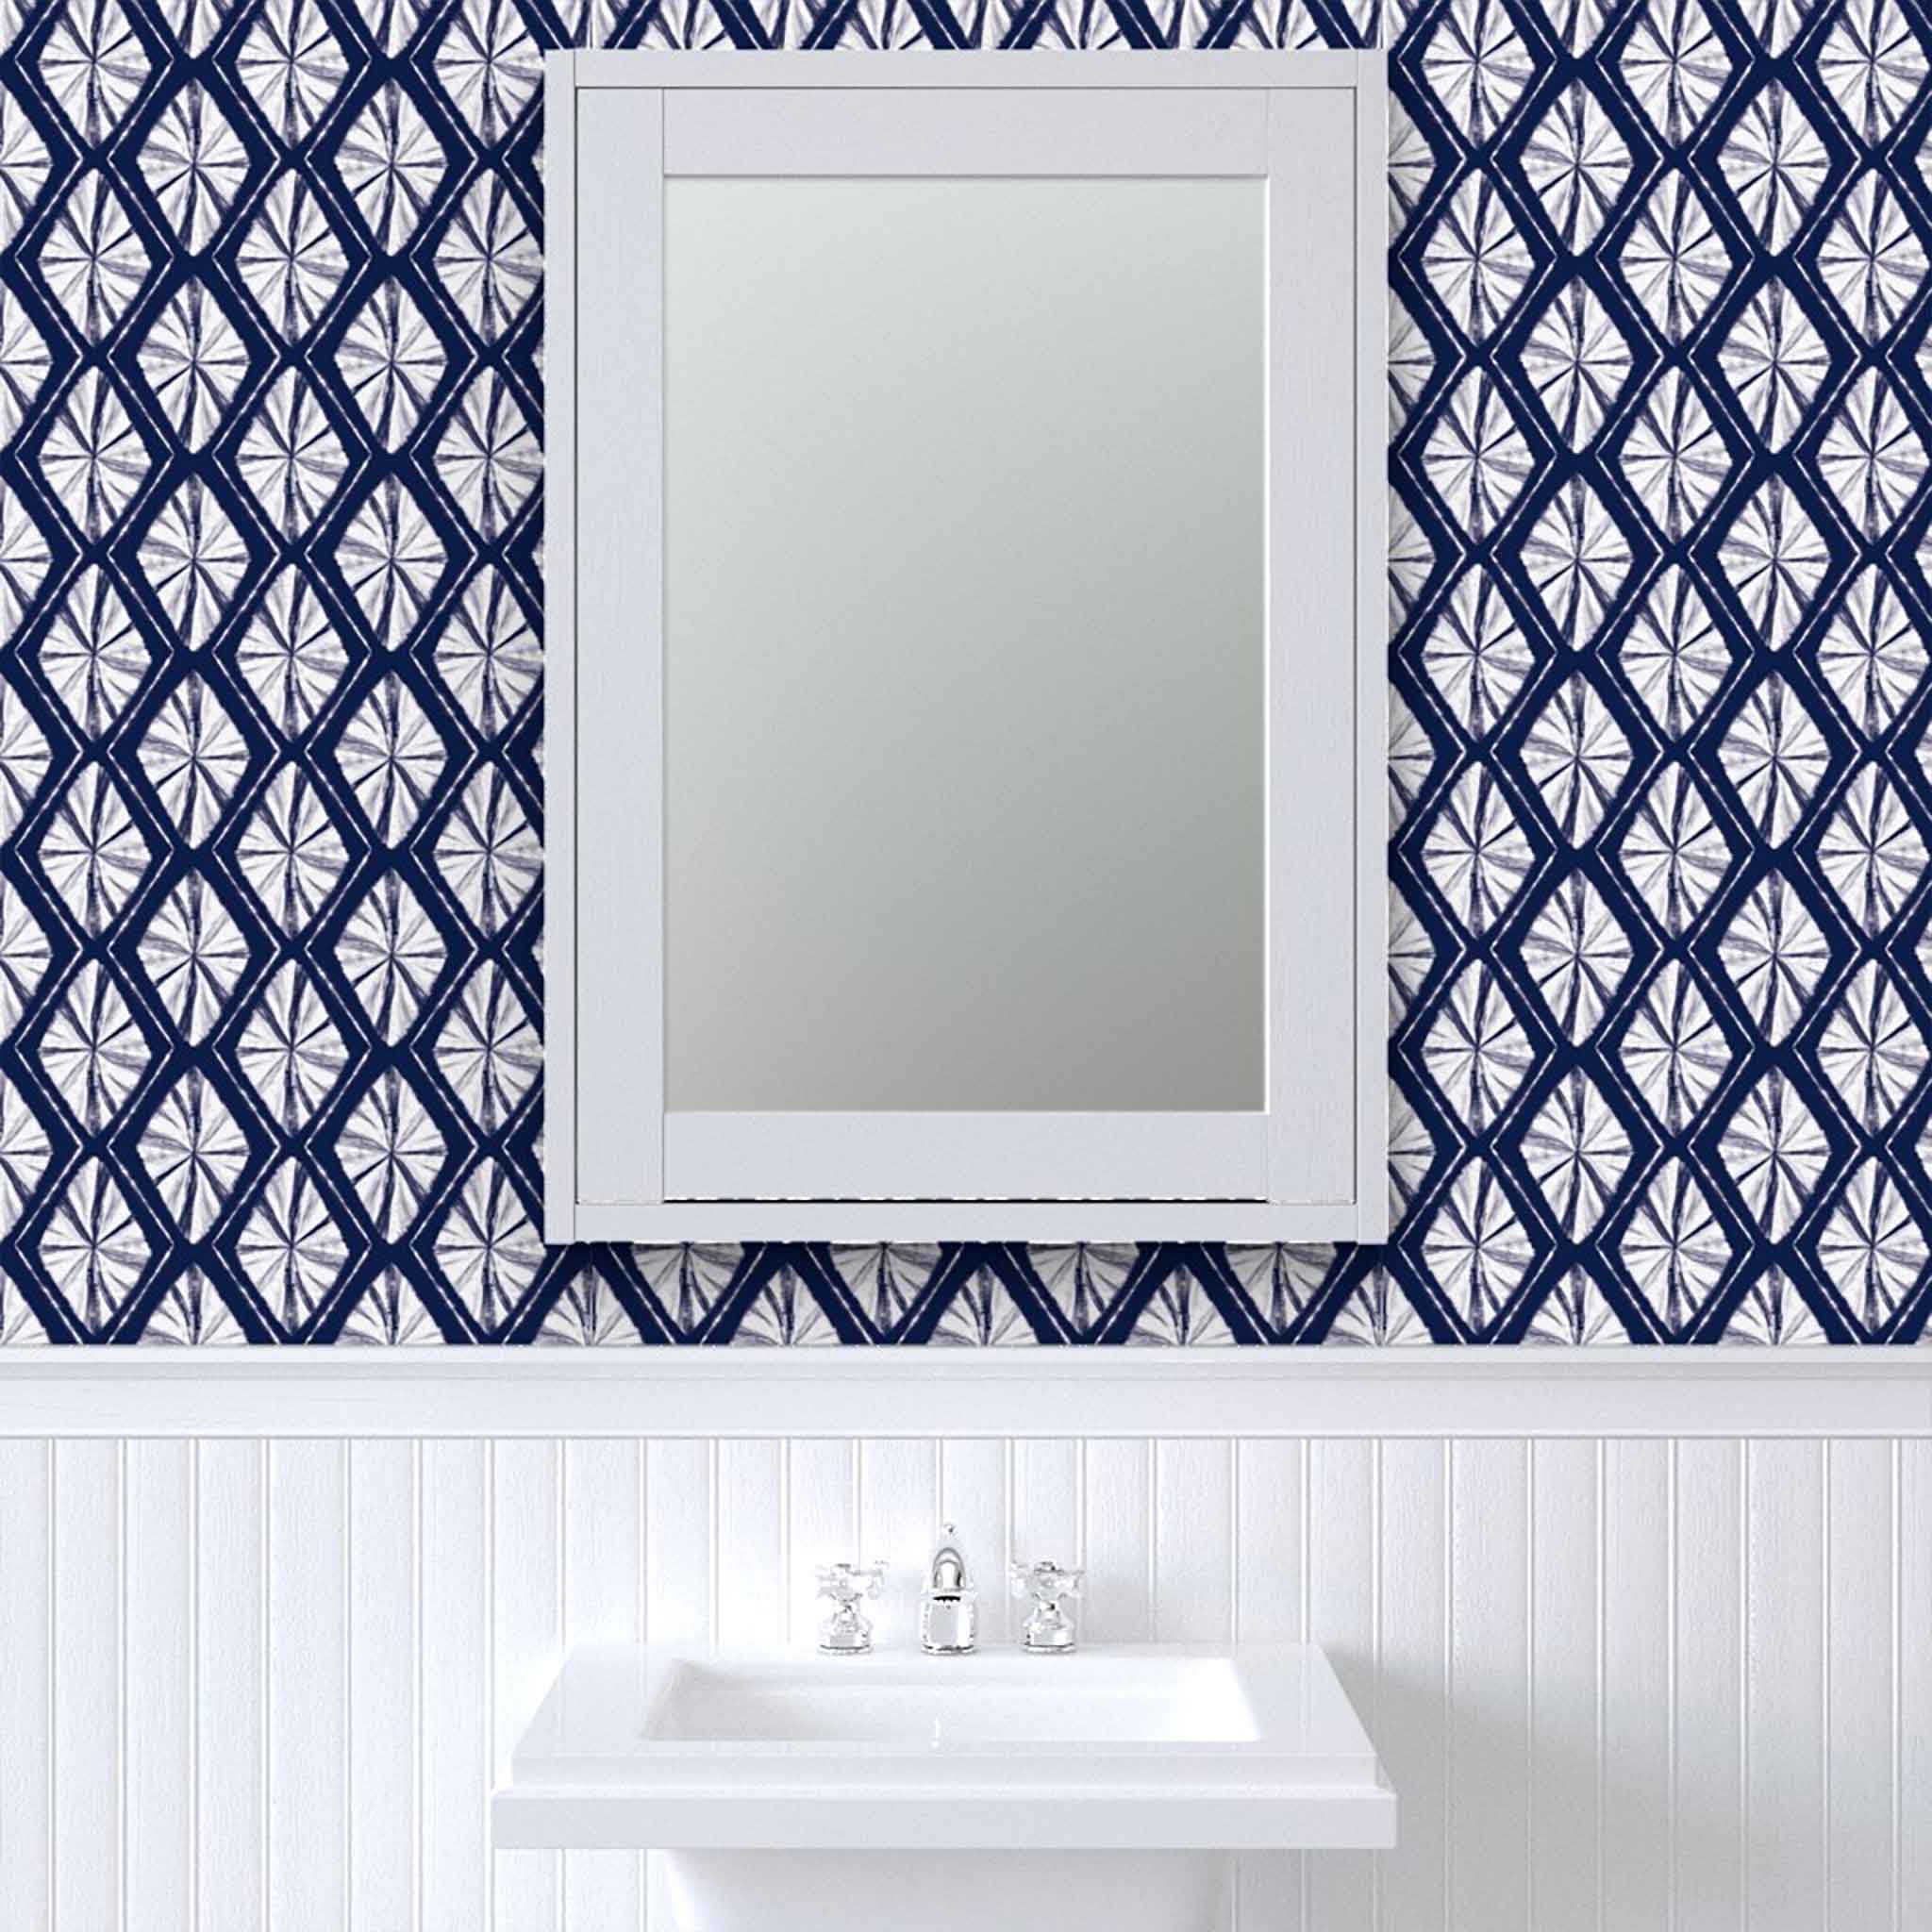 Shibori Indigo Tie Dye Diamonds Pattern Peel & Stick and Pre-Pasted Wallpaper bathroom example